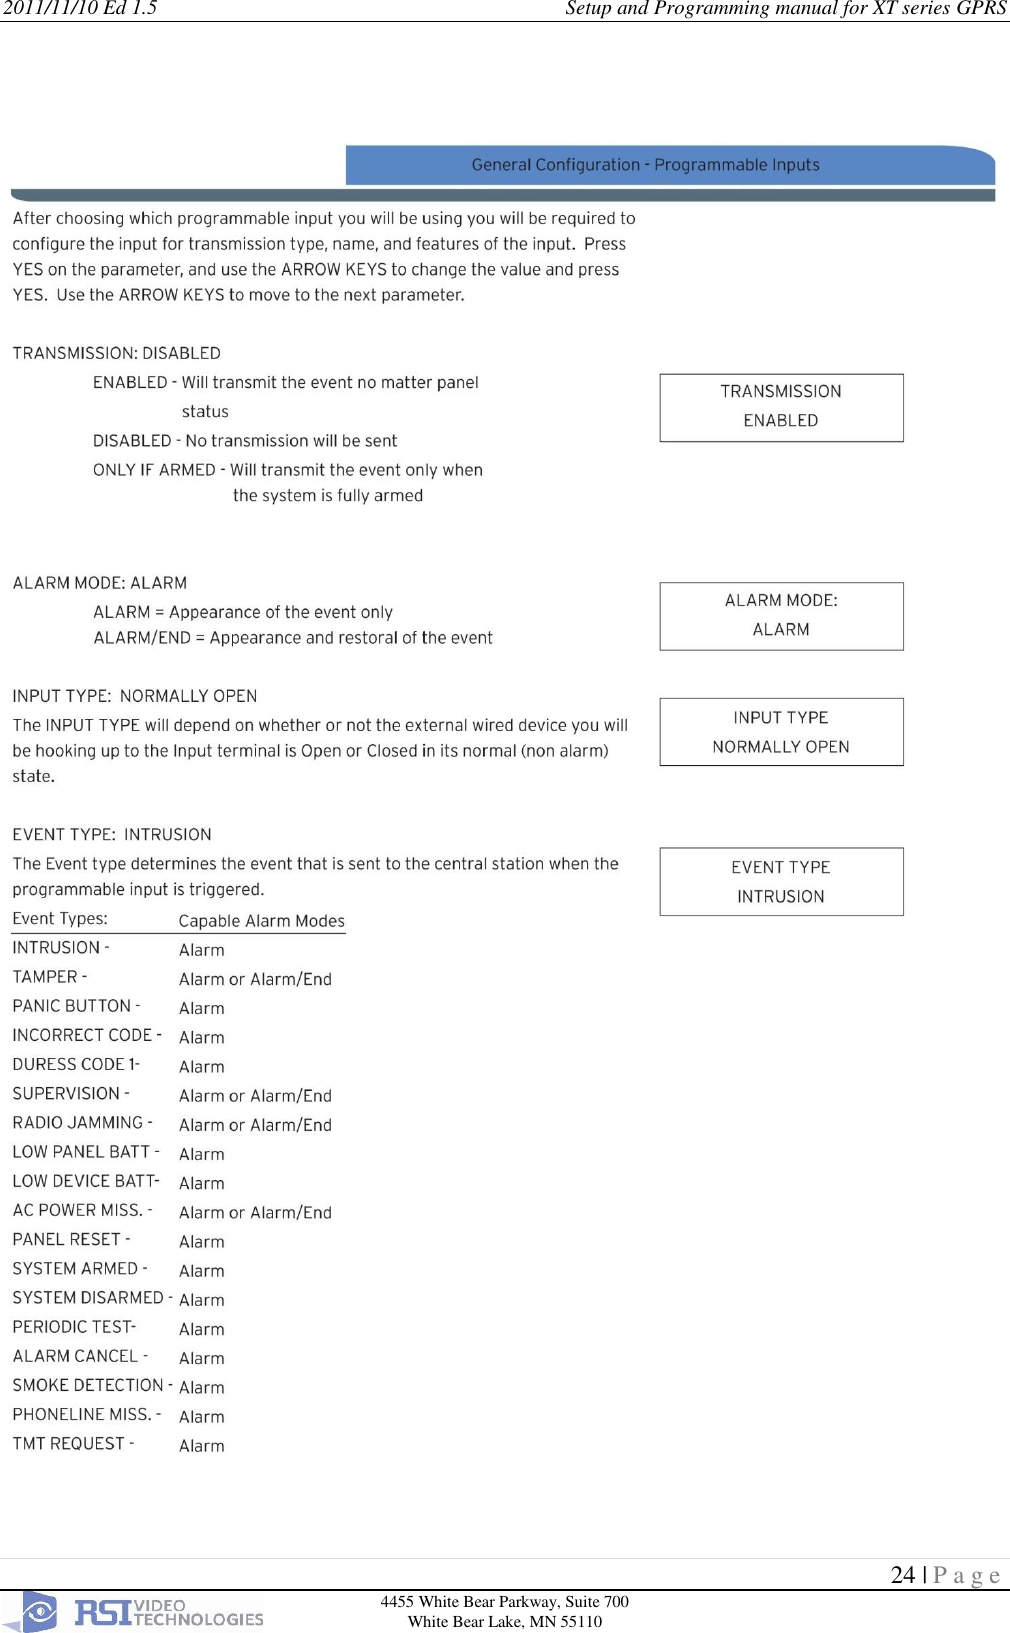 2011/11/10 Ed 1.5      Setup and Programming manual for XT series GPRS  24 | P a g e  4455 White Bear Parkway, Suite 700 White Bear Lake, MN 55110         